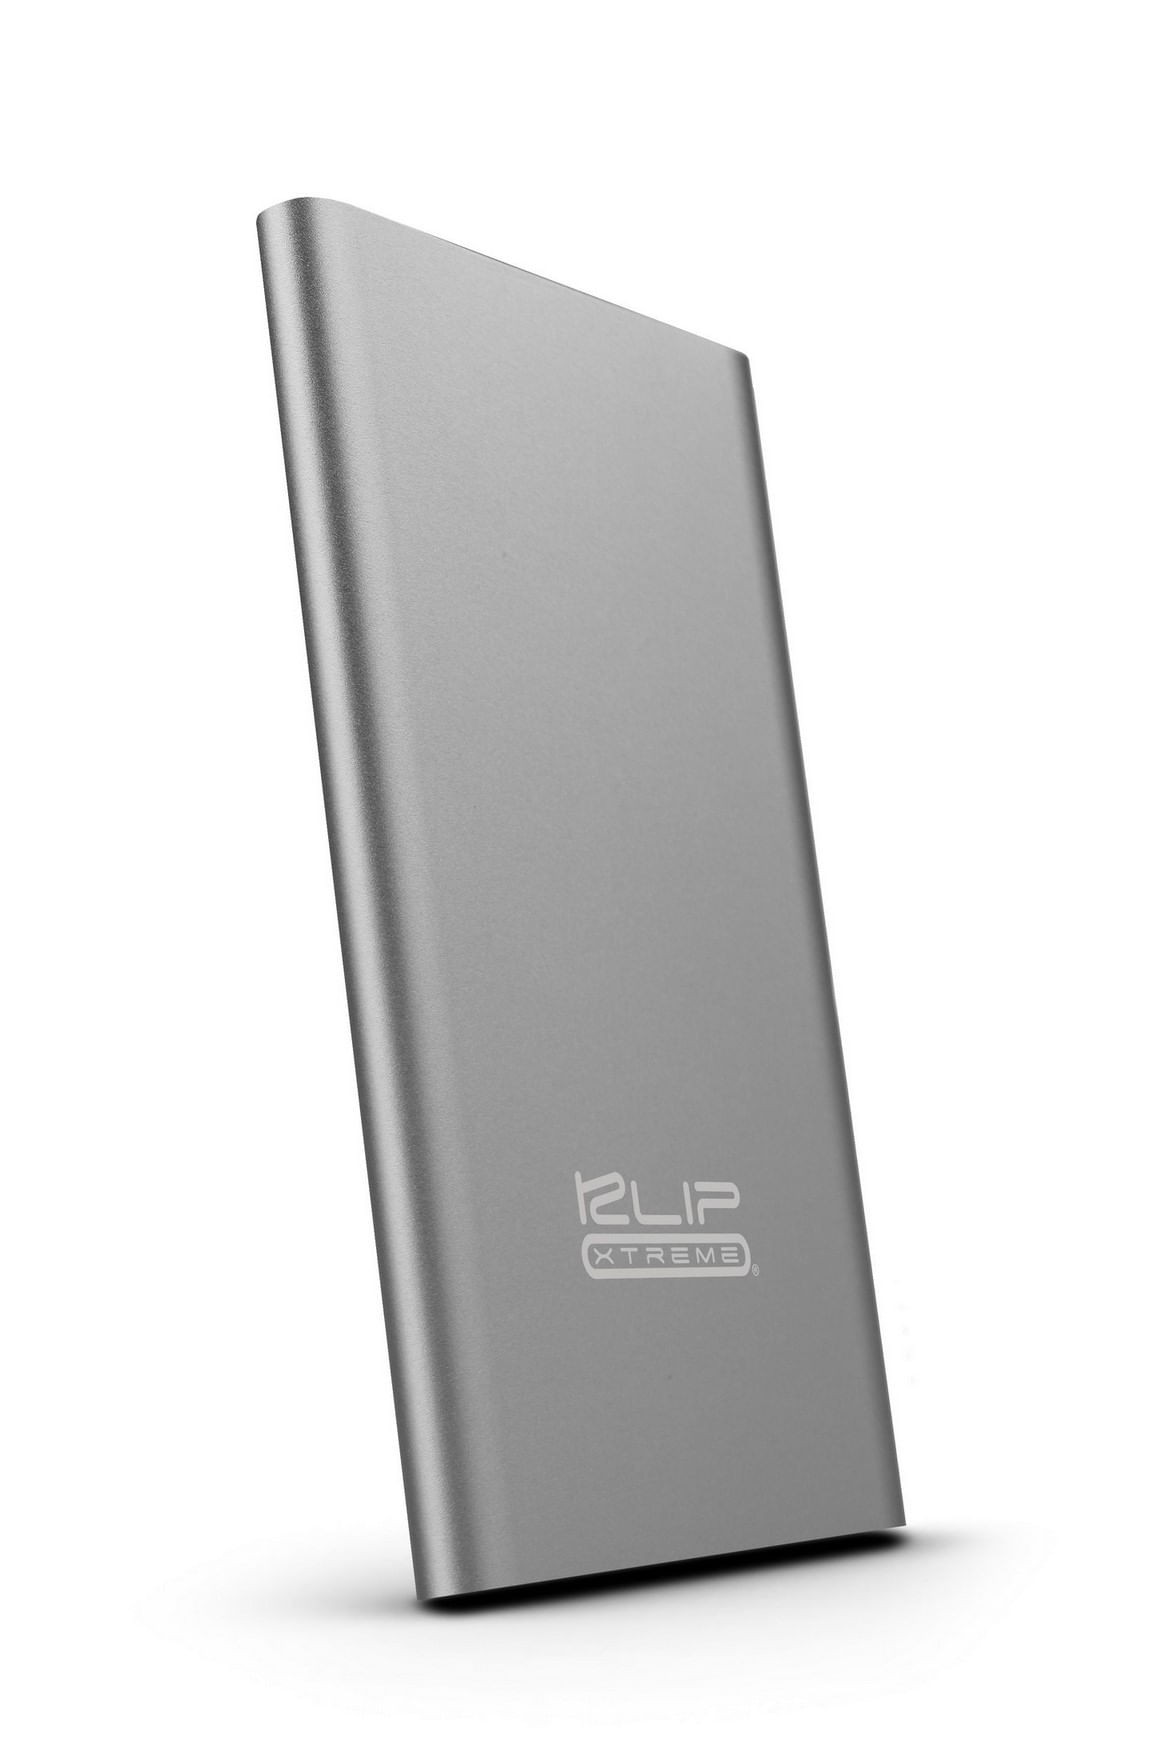 Cargador Portátil Klip Xtreme Enox5000 5000 MAh USB Plata - KBH-155SV